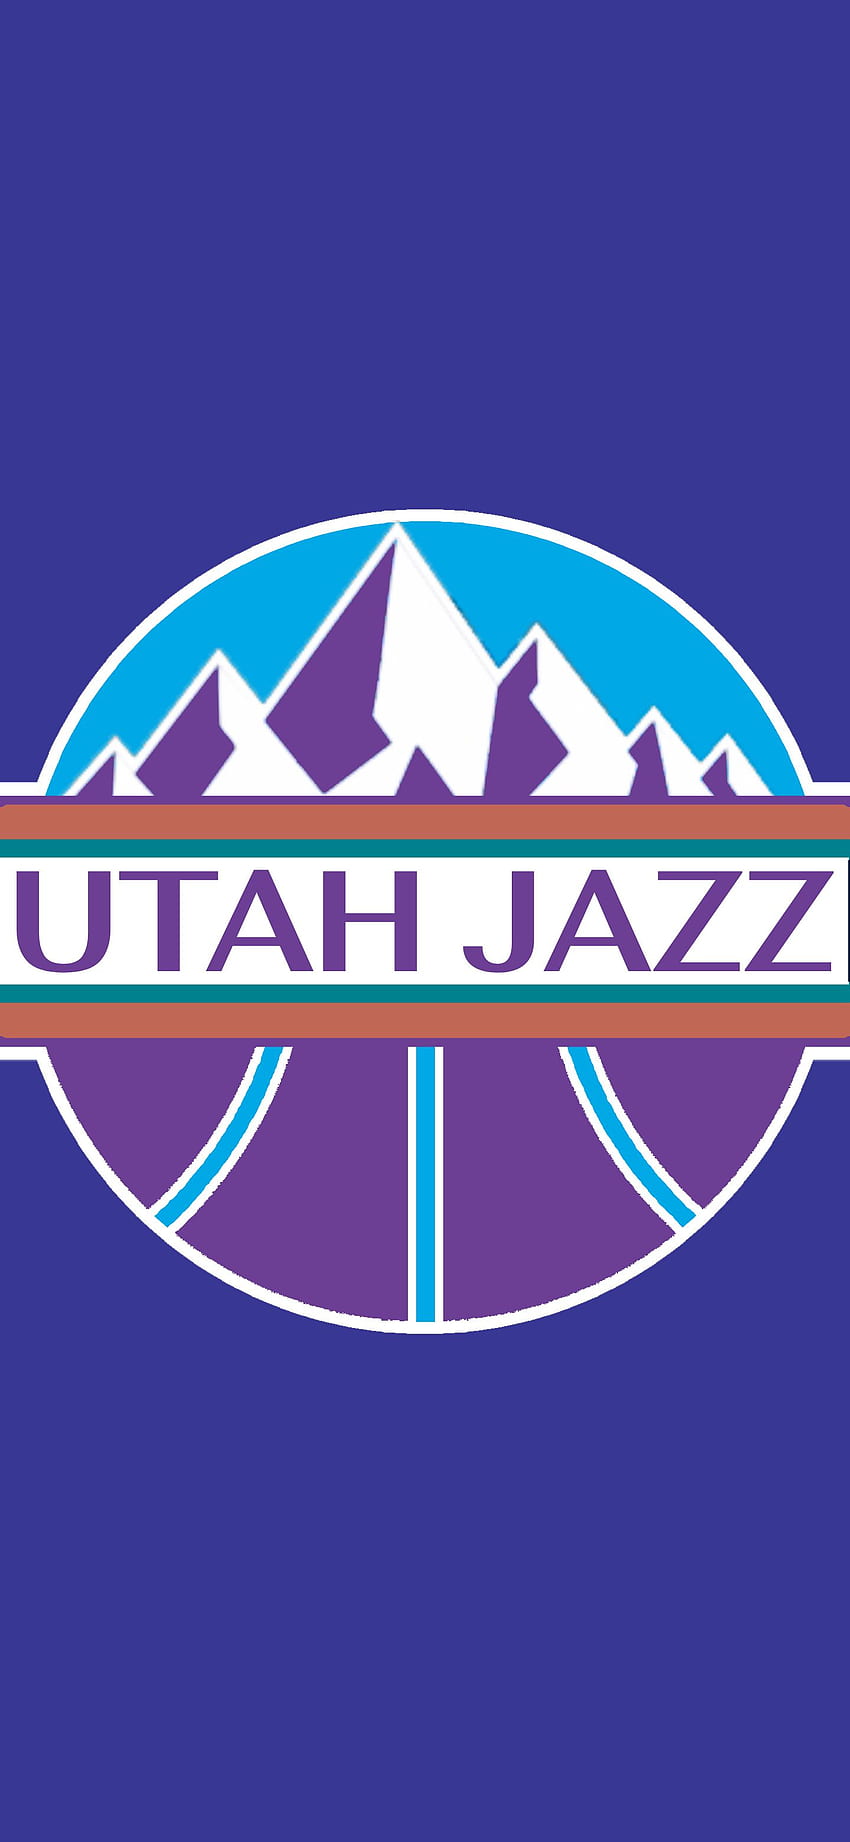 Utah Jazz Mountain - Utah Jazz 2019 - e fundo Papel de parede de celular HD